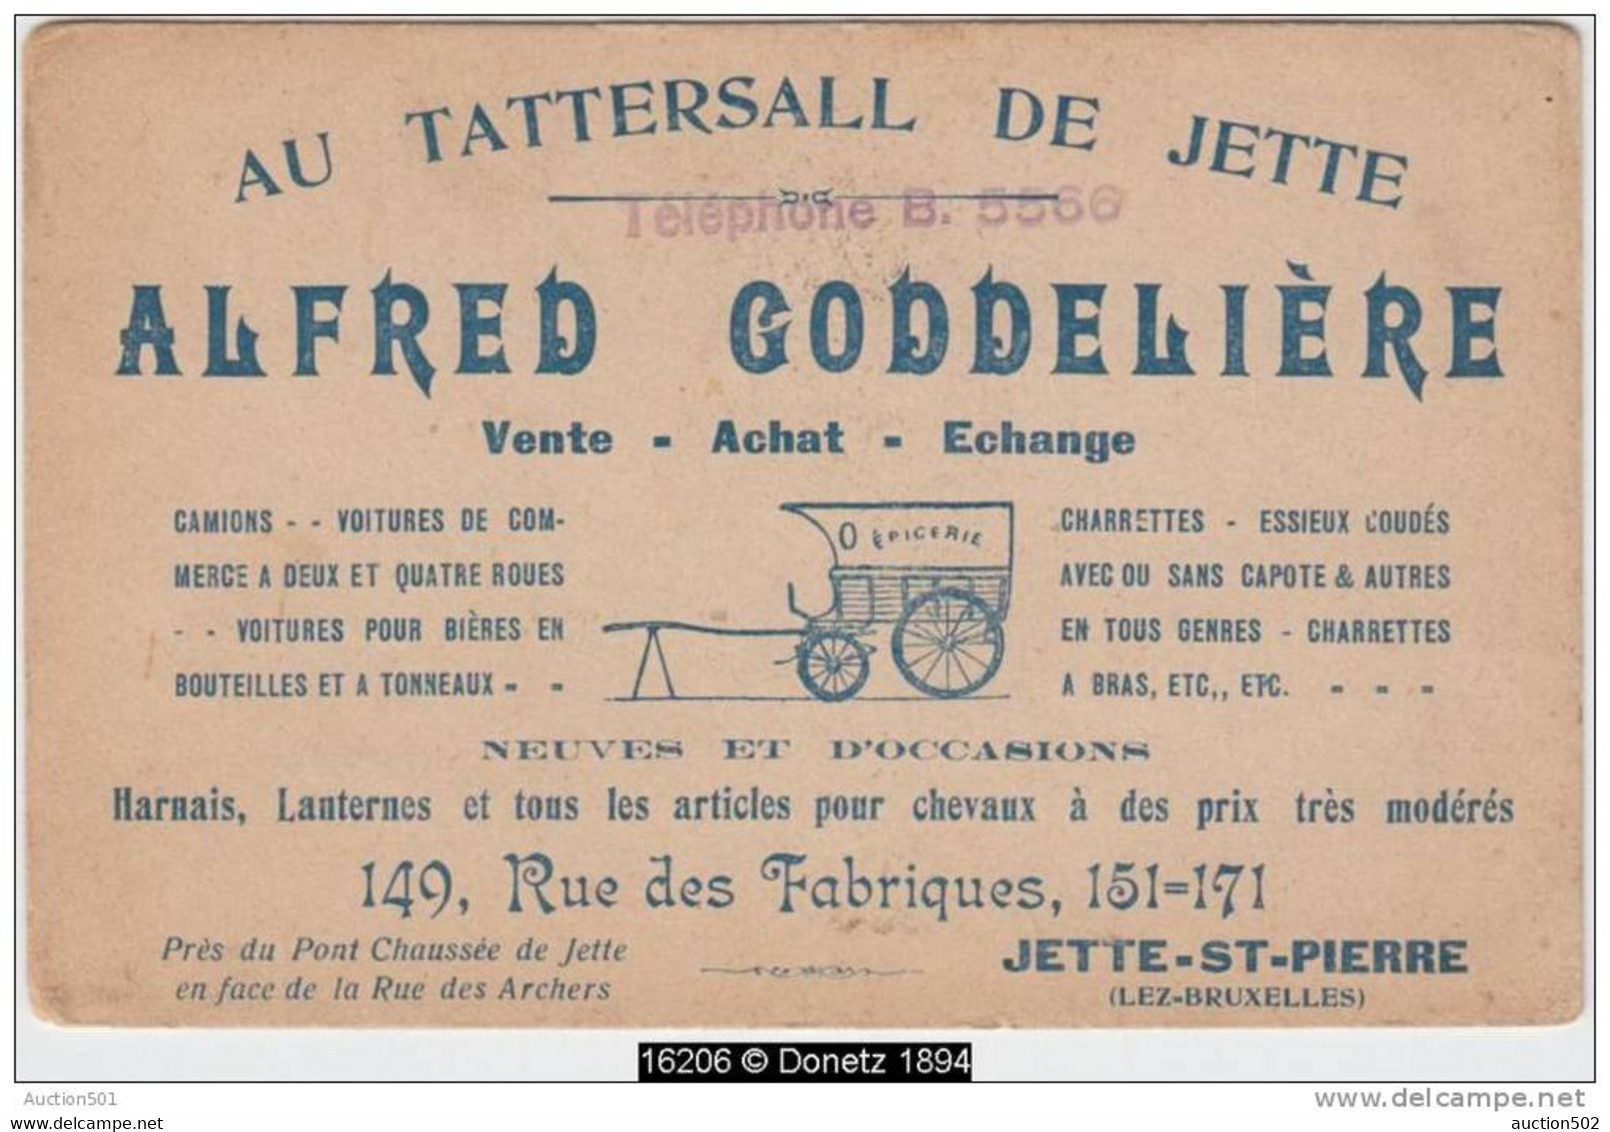 16206g A. GODDELIERE - Au Tattersall - Achat - Vente - Voitures - Charrettes - Jette-St-Pieters - Carte Publicitaire - Jette